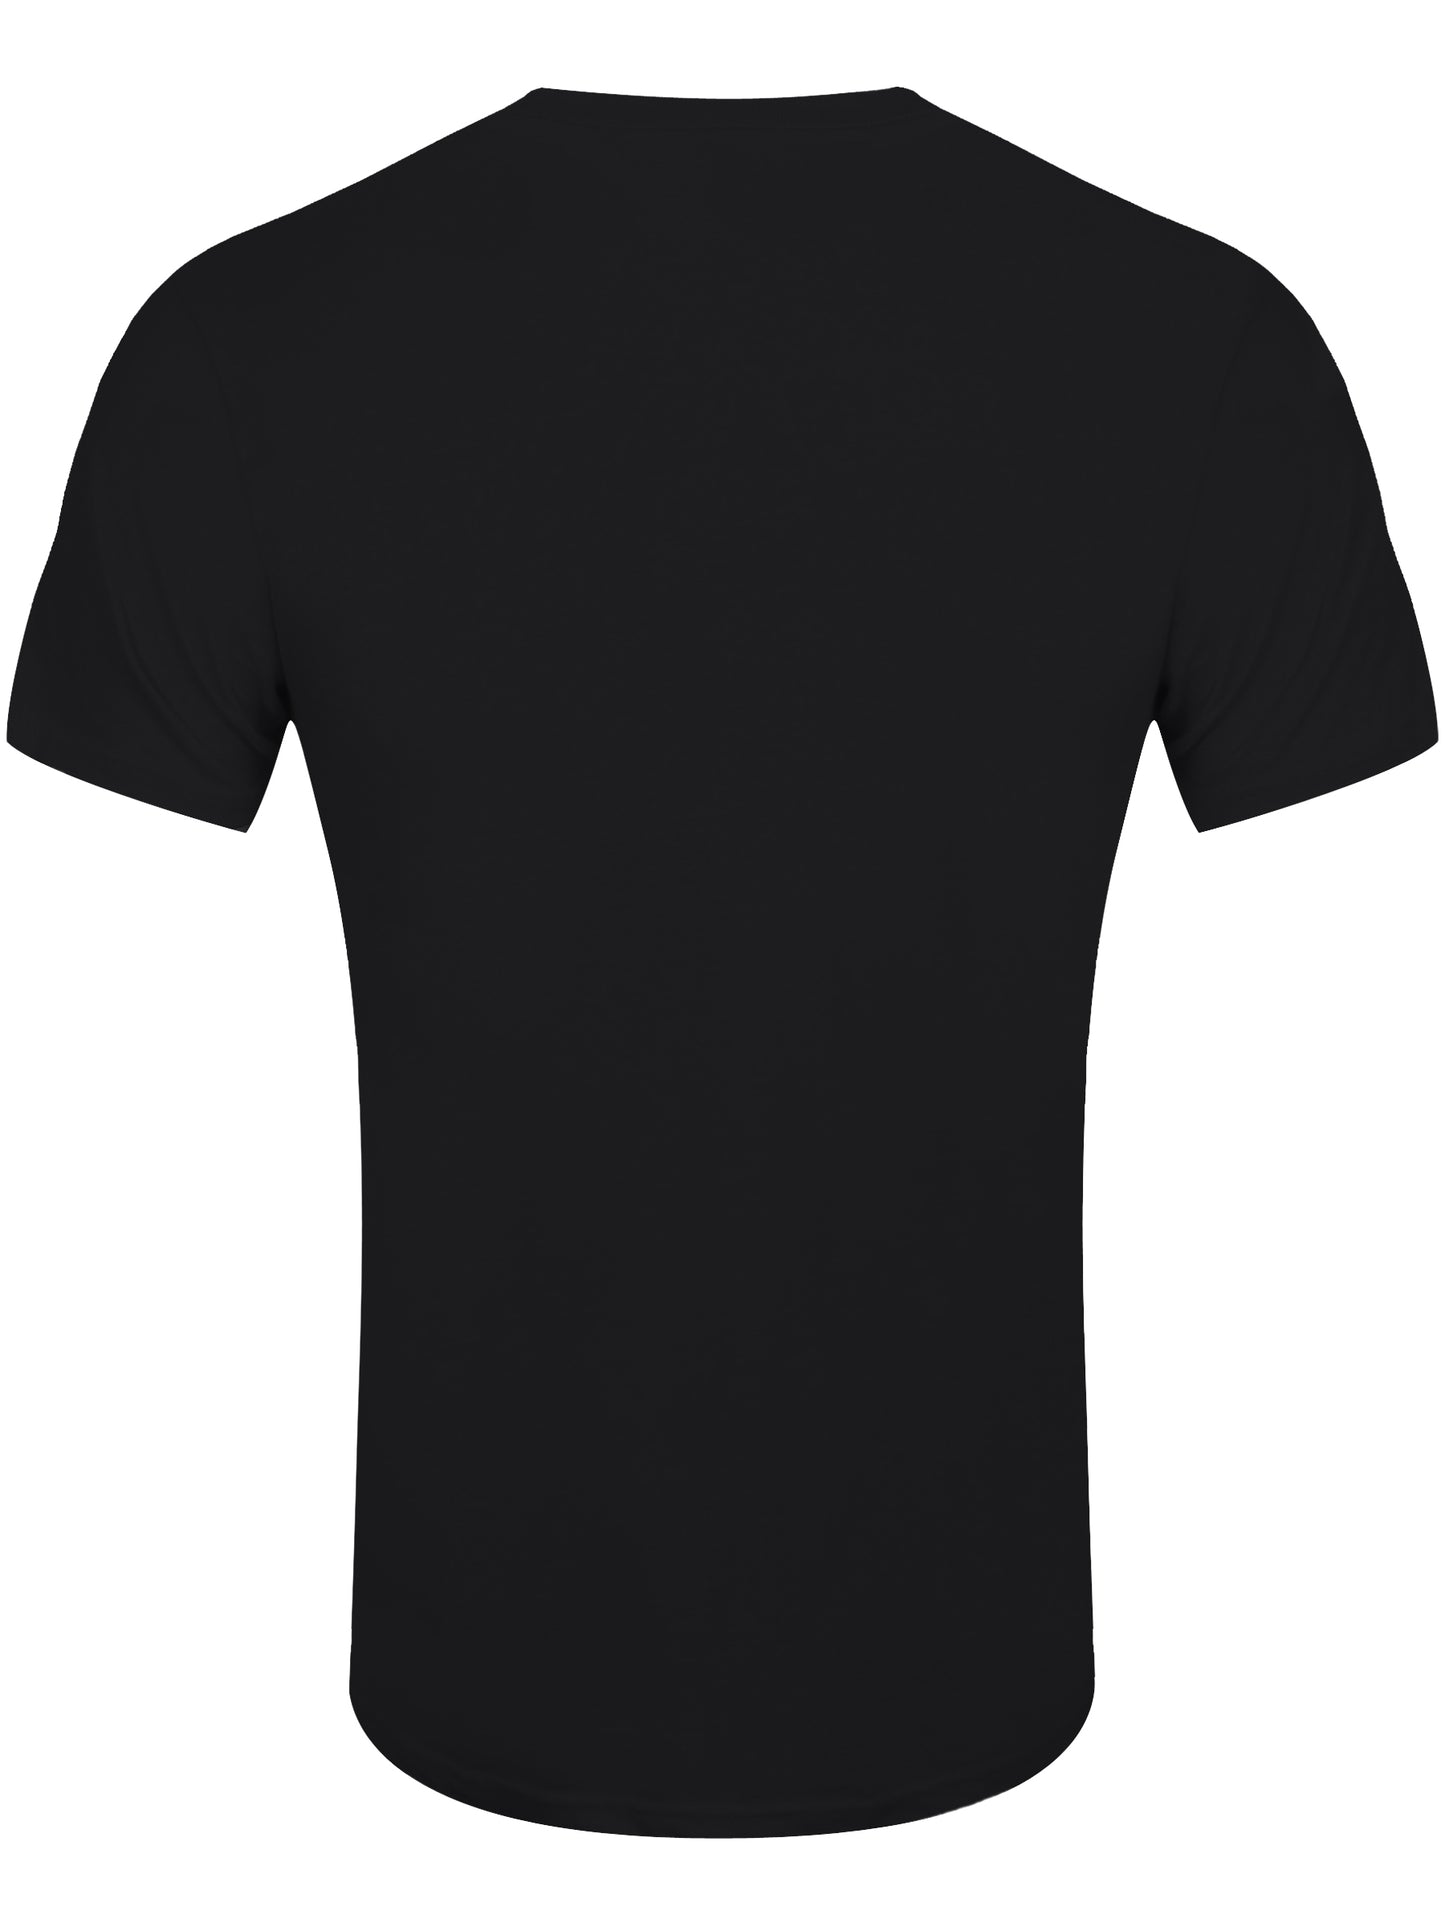 Machine Head The More Things Change Men's Black T-Shirt